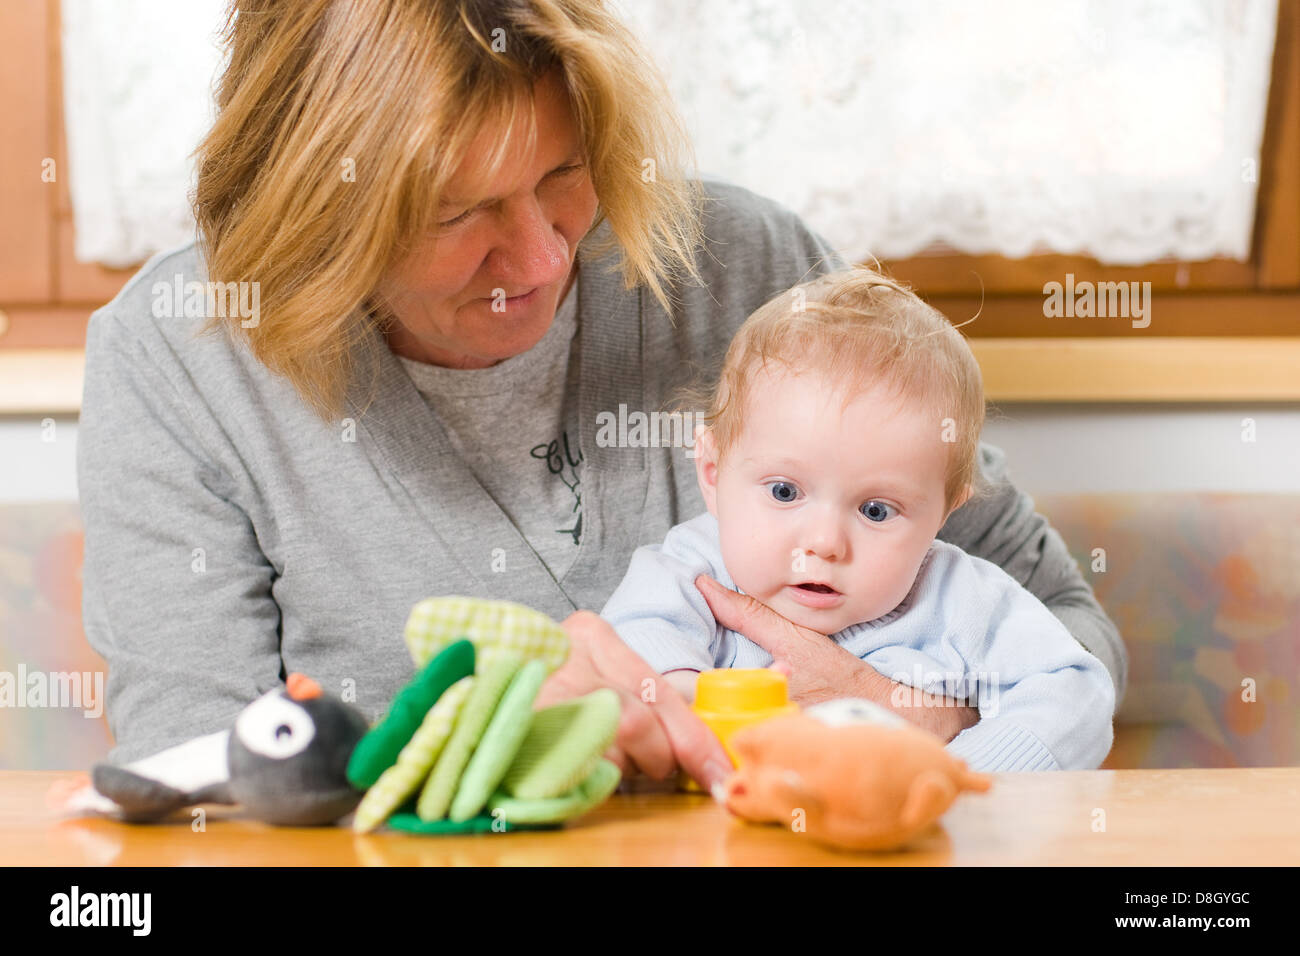 granny with grandson Stock Photo